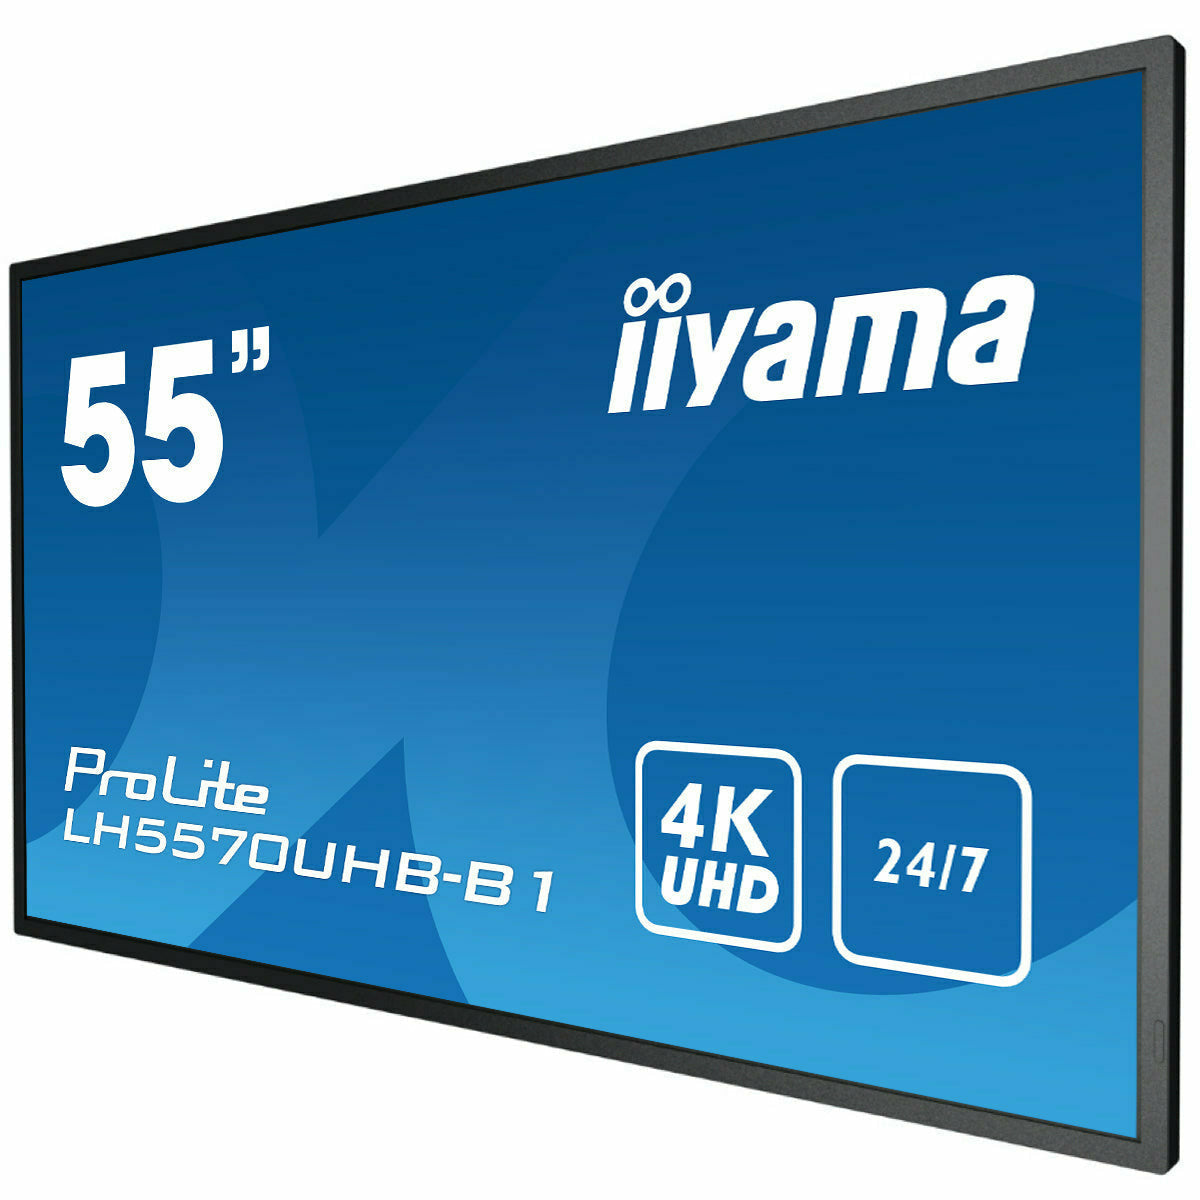 Dark Cyan iiyama ProLite LH5570UHB-B1 55" Large Format Display with 24/7, 4K UHD, Android 9.0 and 700cd/m² High Brightness